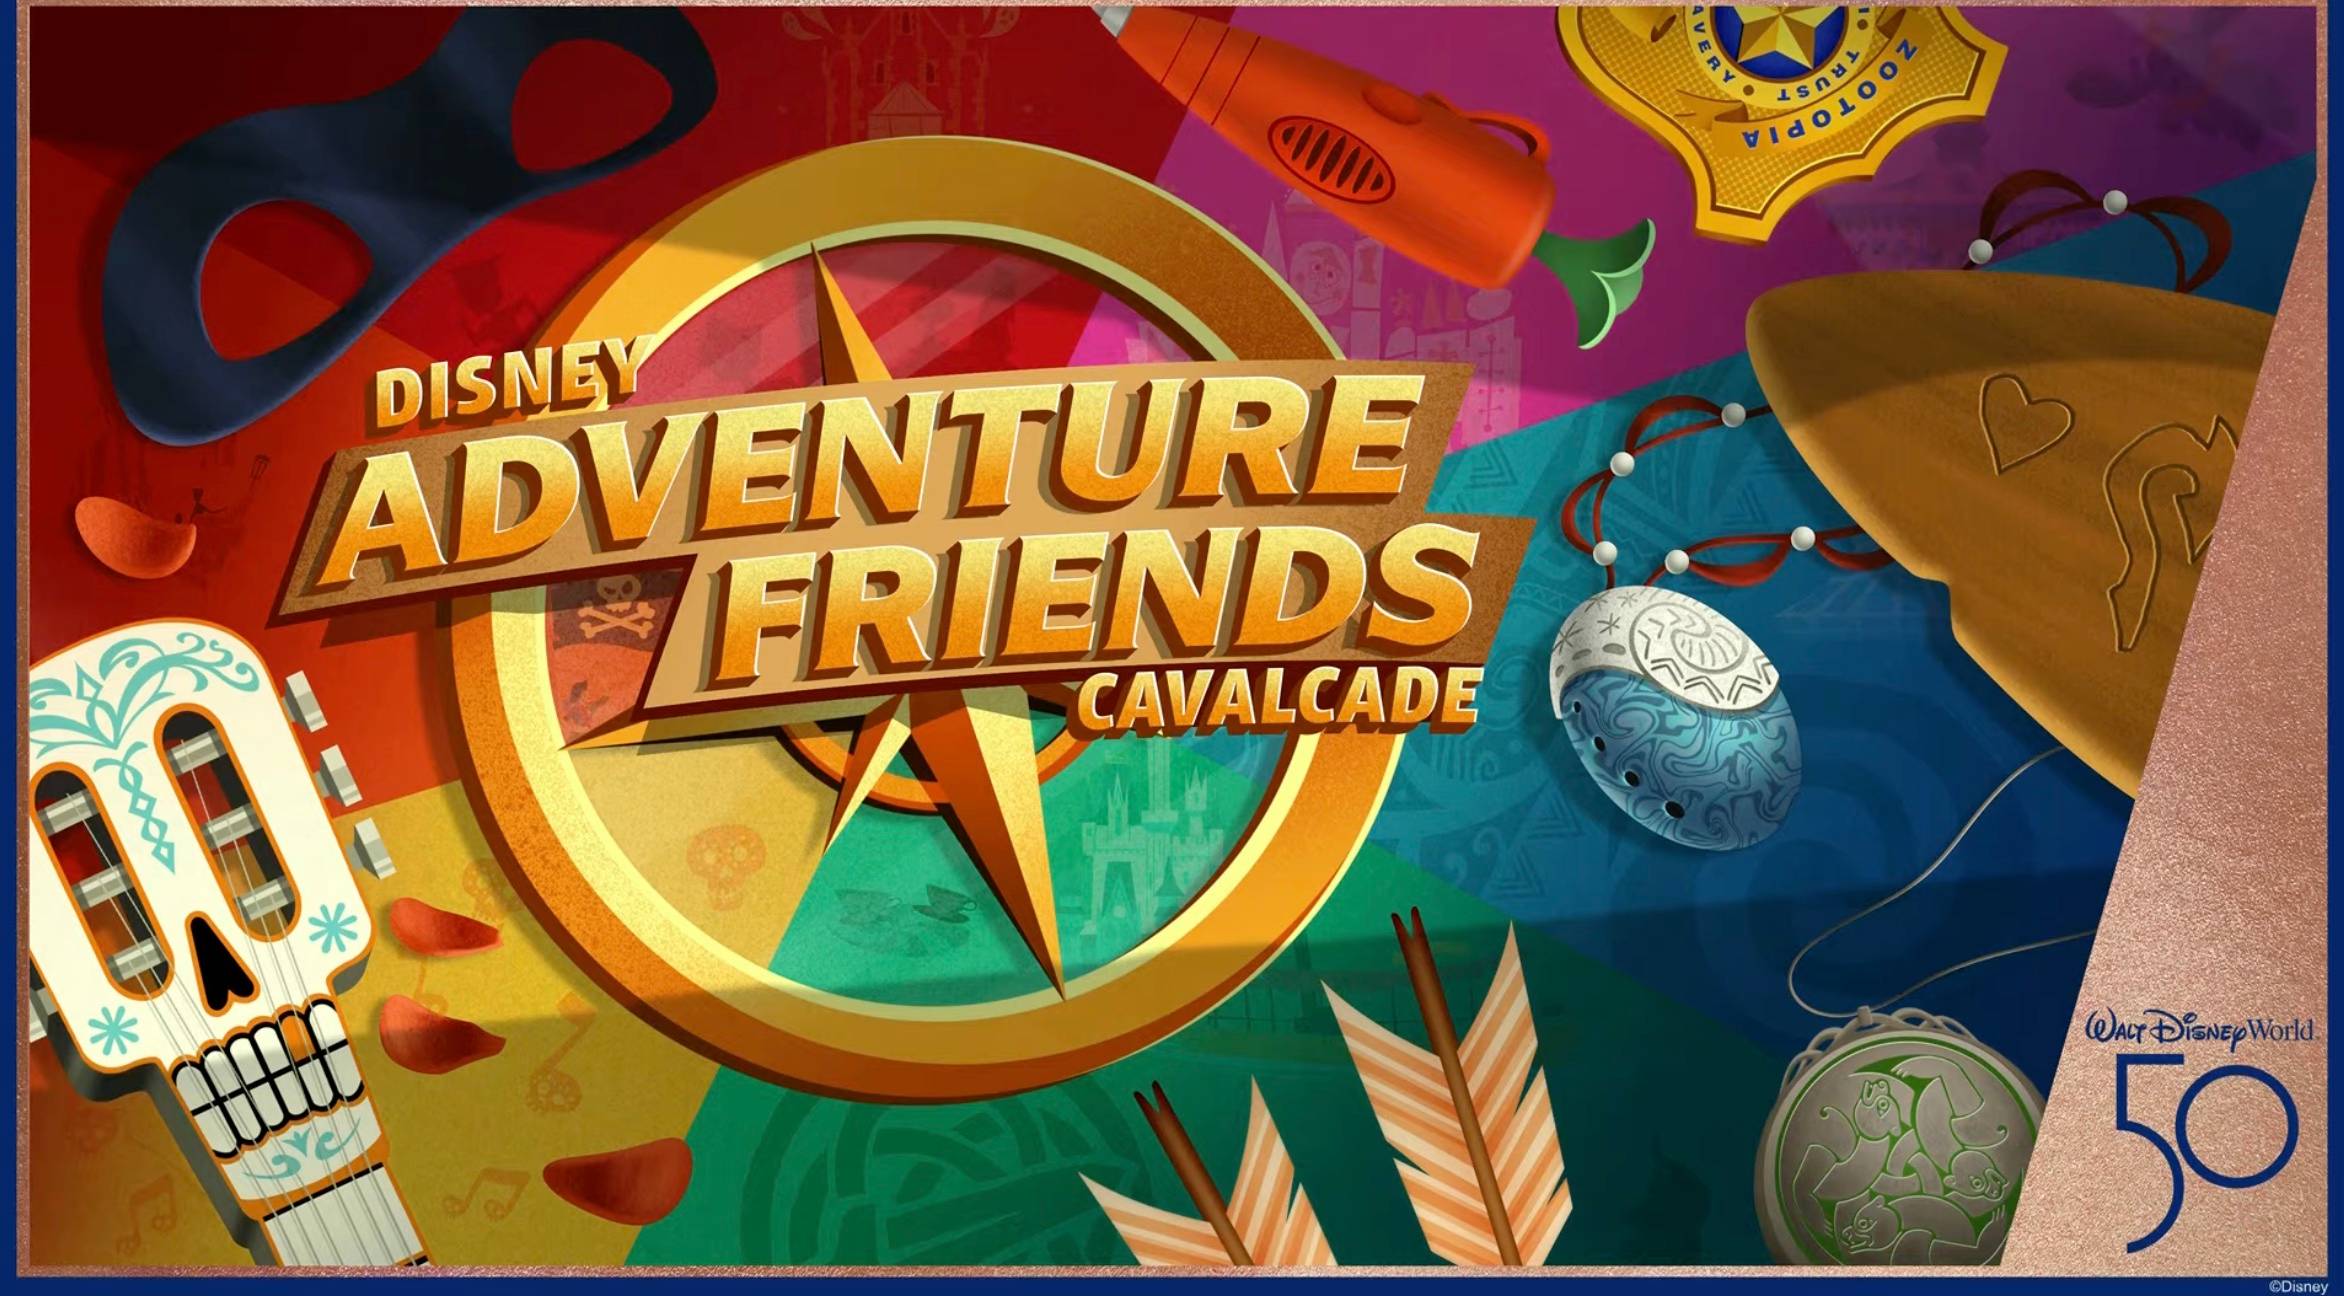 Cavalcades to remain alongside full parades at Magic Kingdom as new 'Disney Adventures Friends Cavalcade' will debut spring 2022